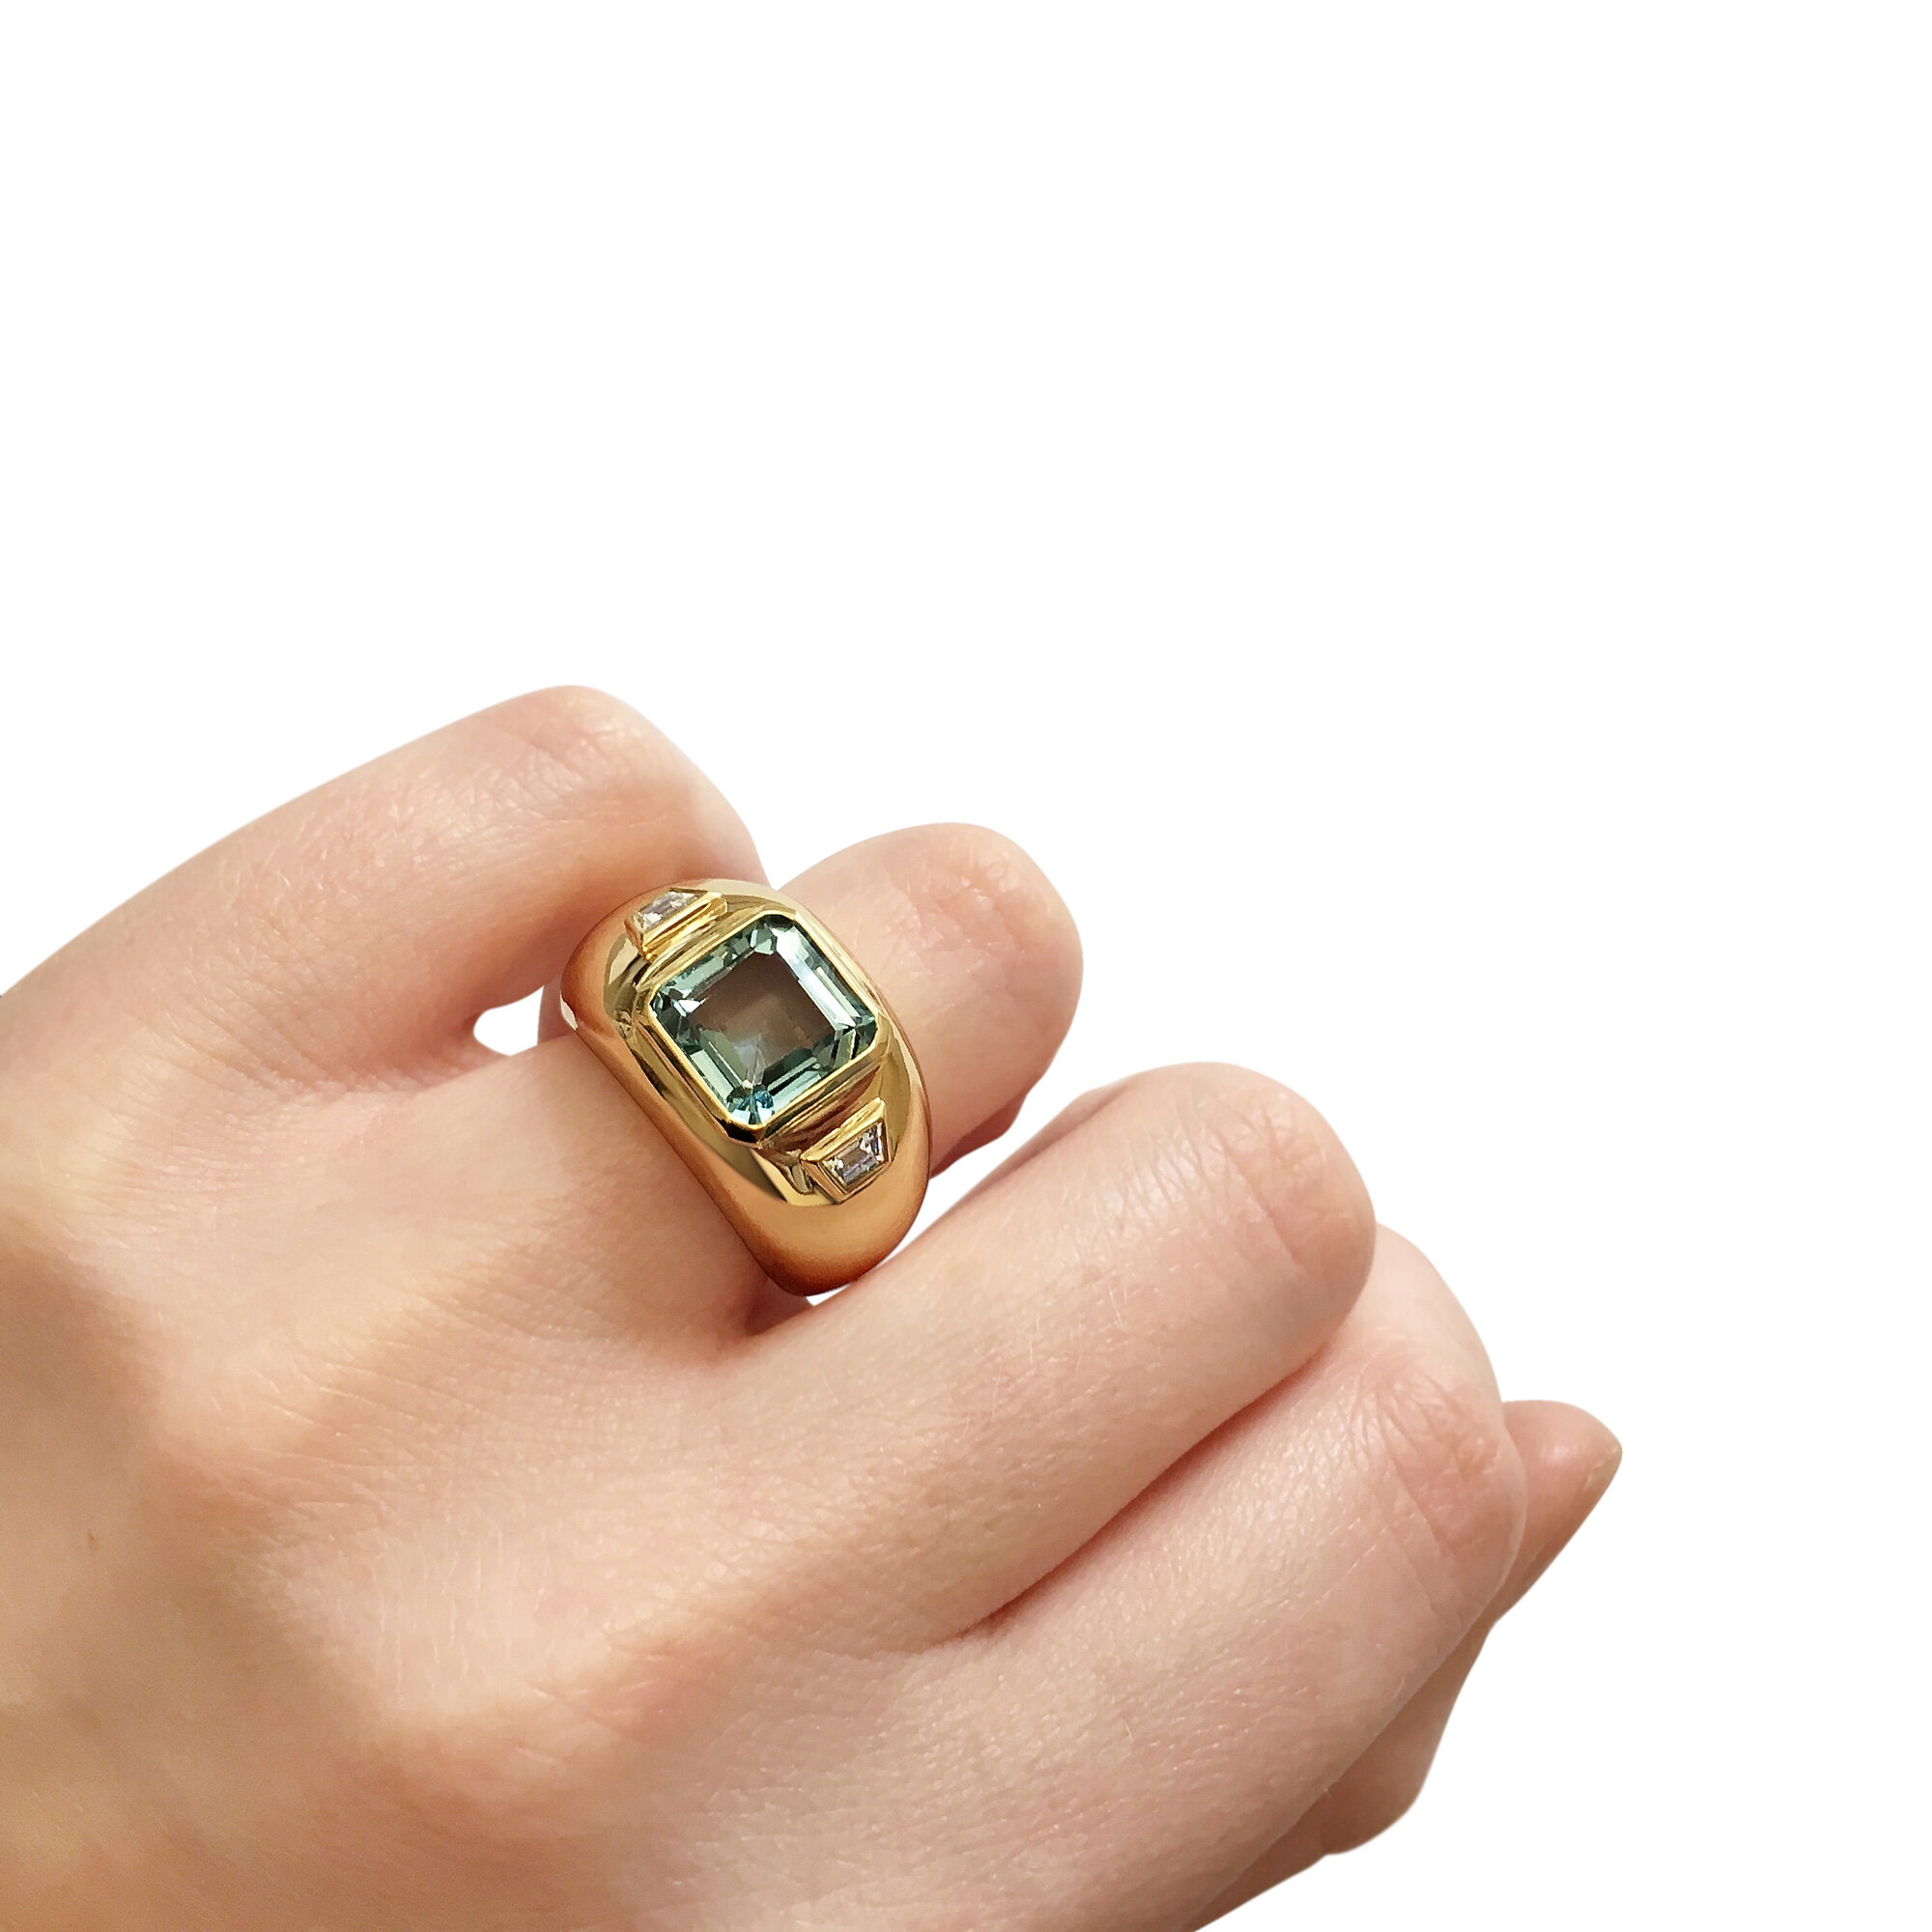 Aquamarine and Diamond Gypsy Ring